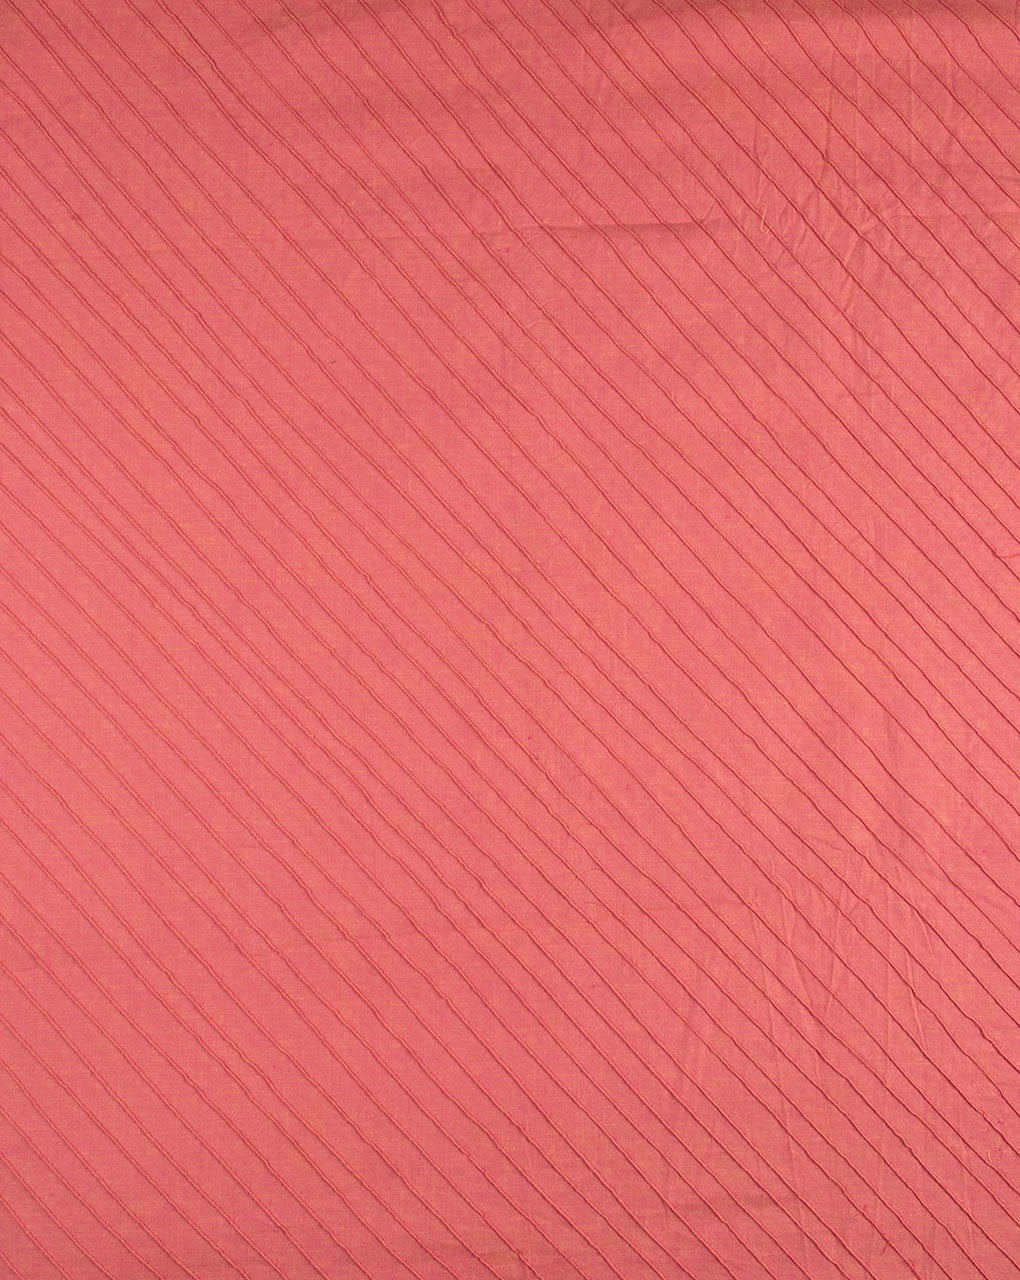 Pin-Tucks Cotton Fabric ( Width 40 Inch ) - Fabriclore.com